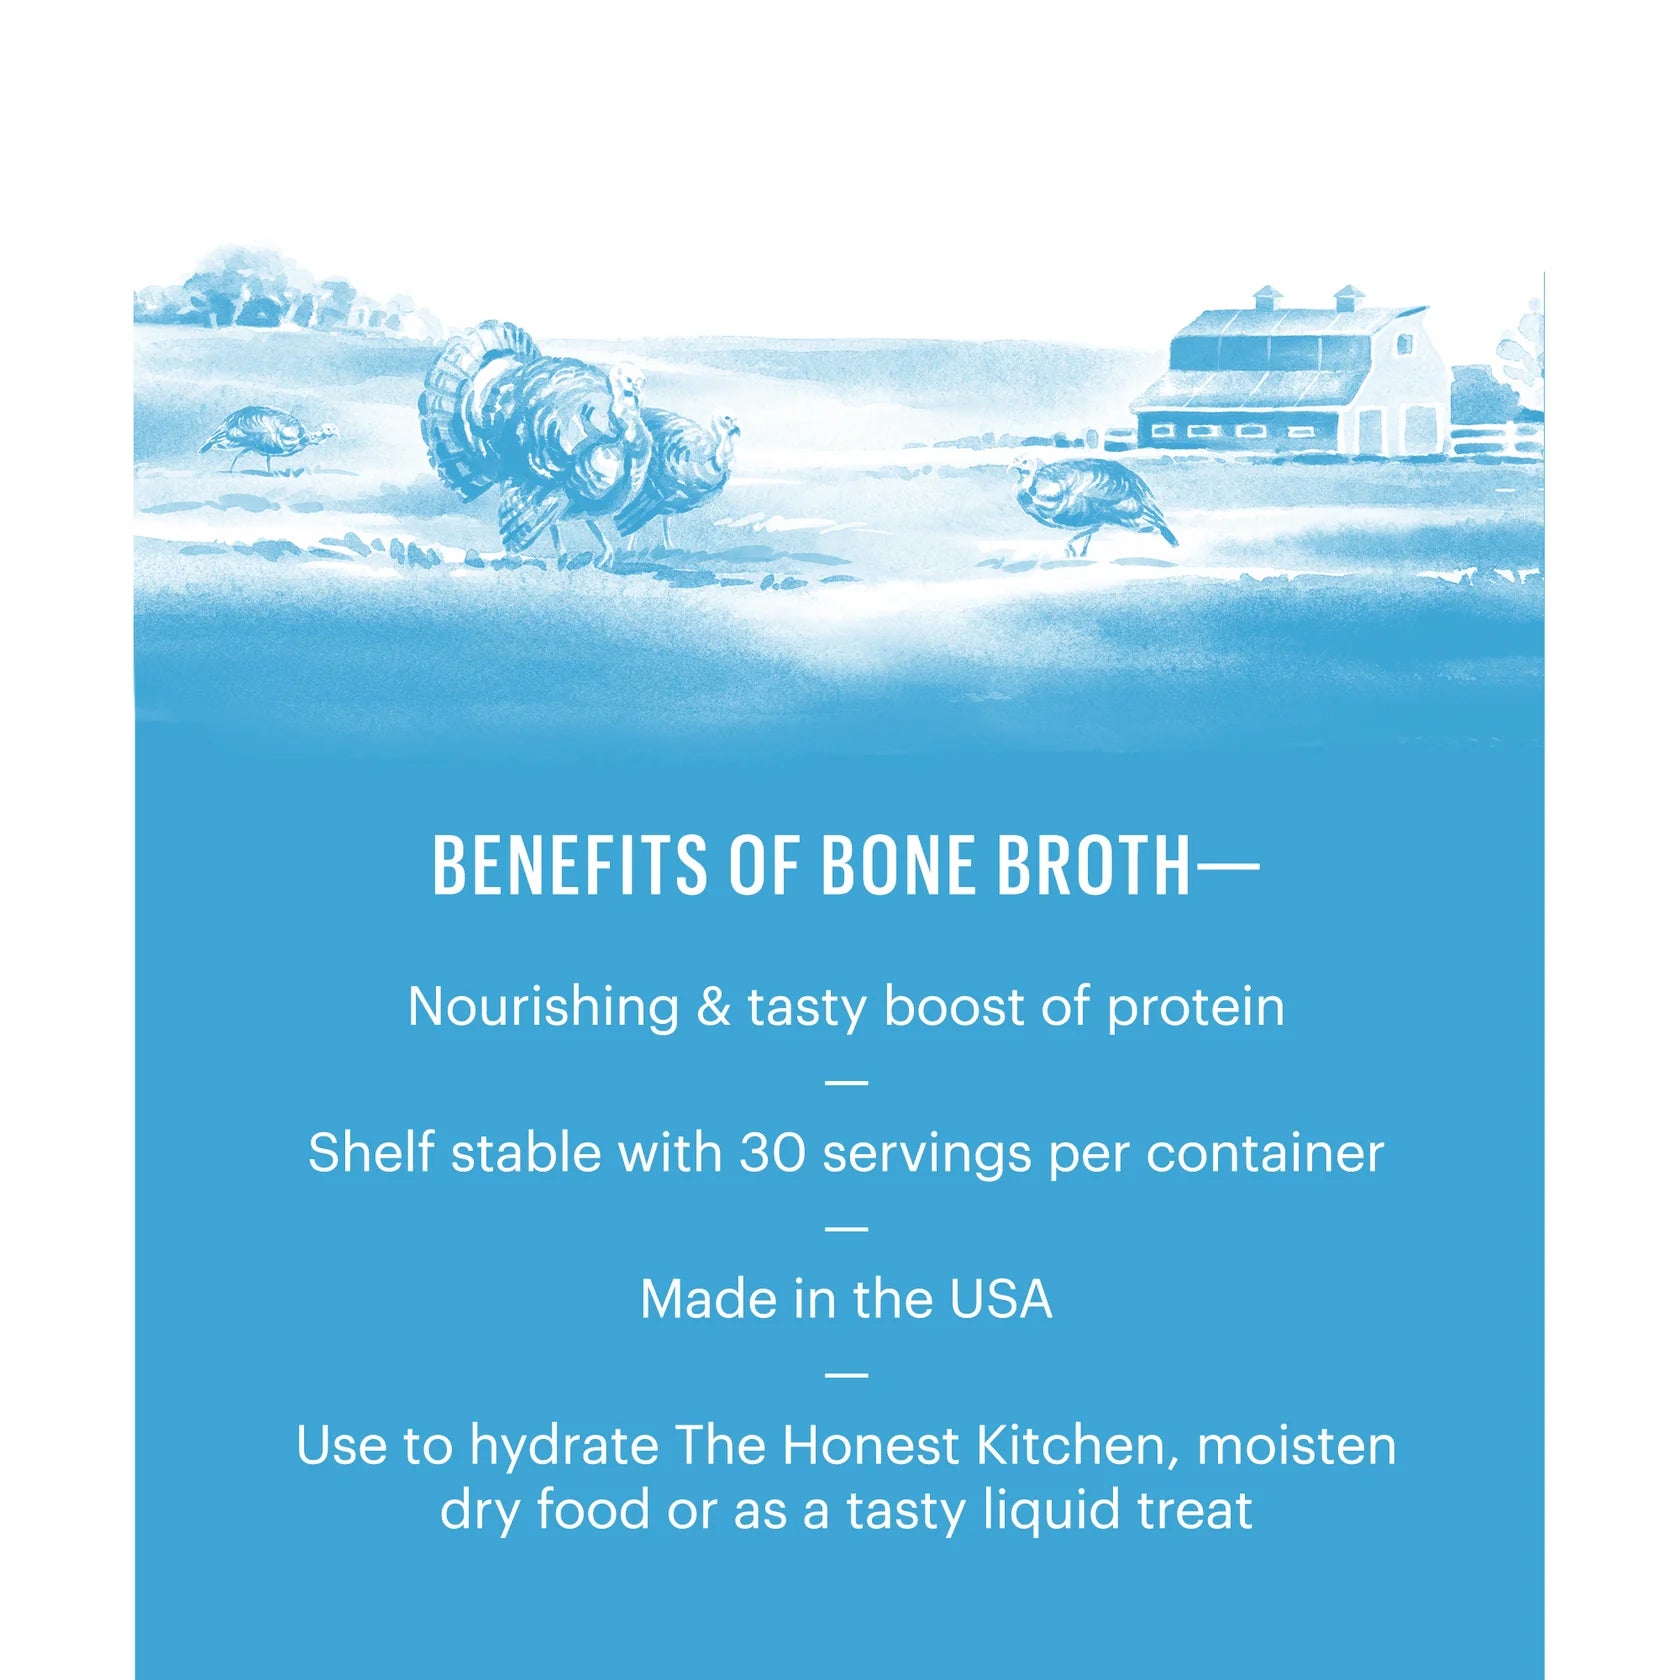 Turkey Bone Broth